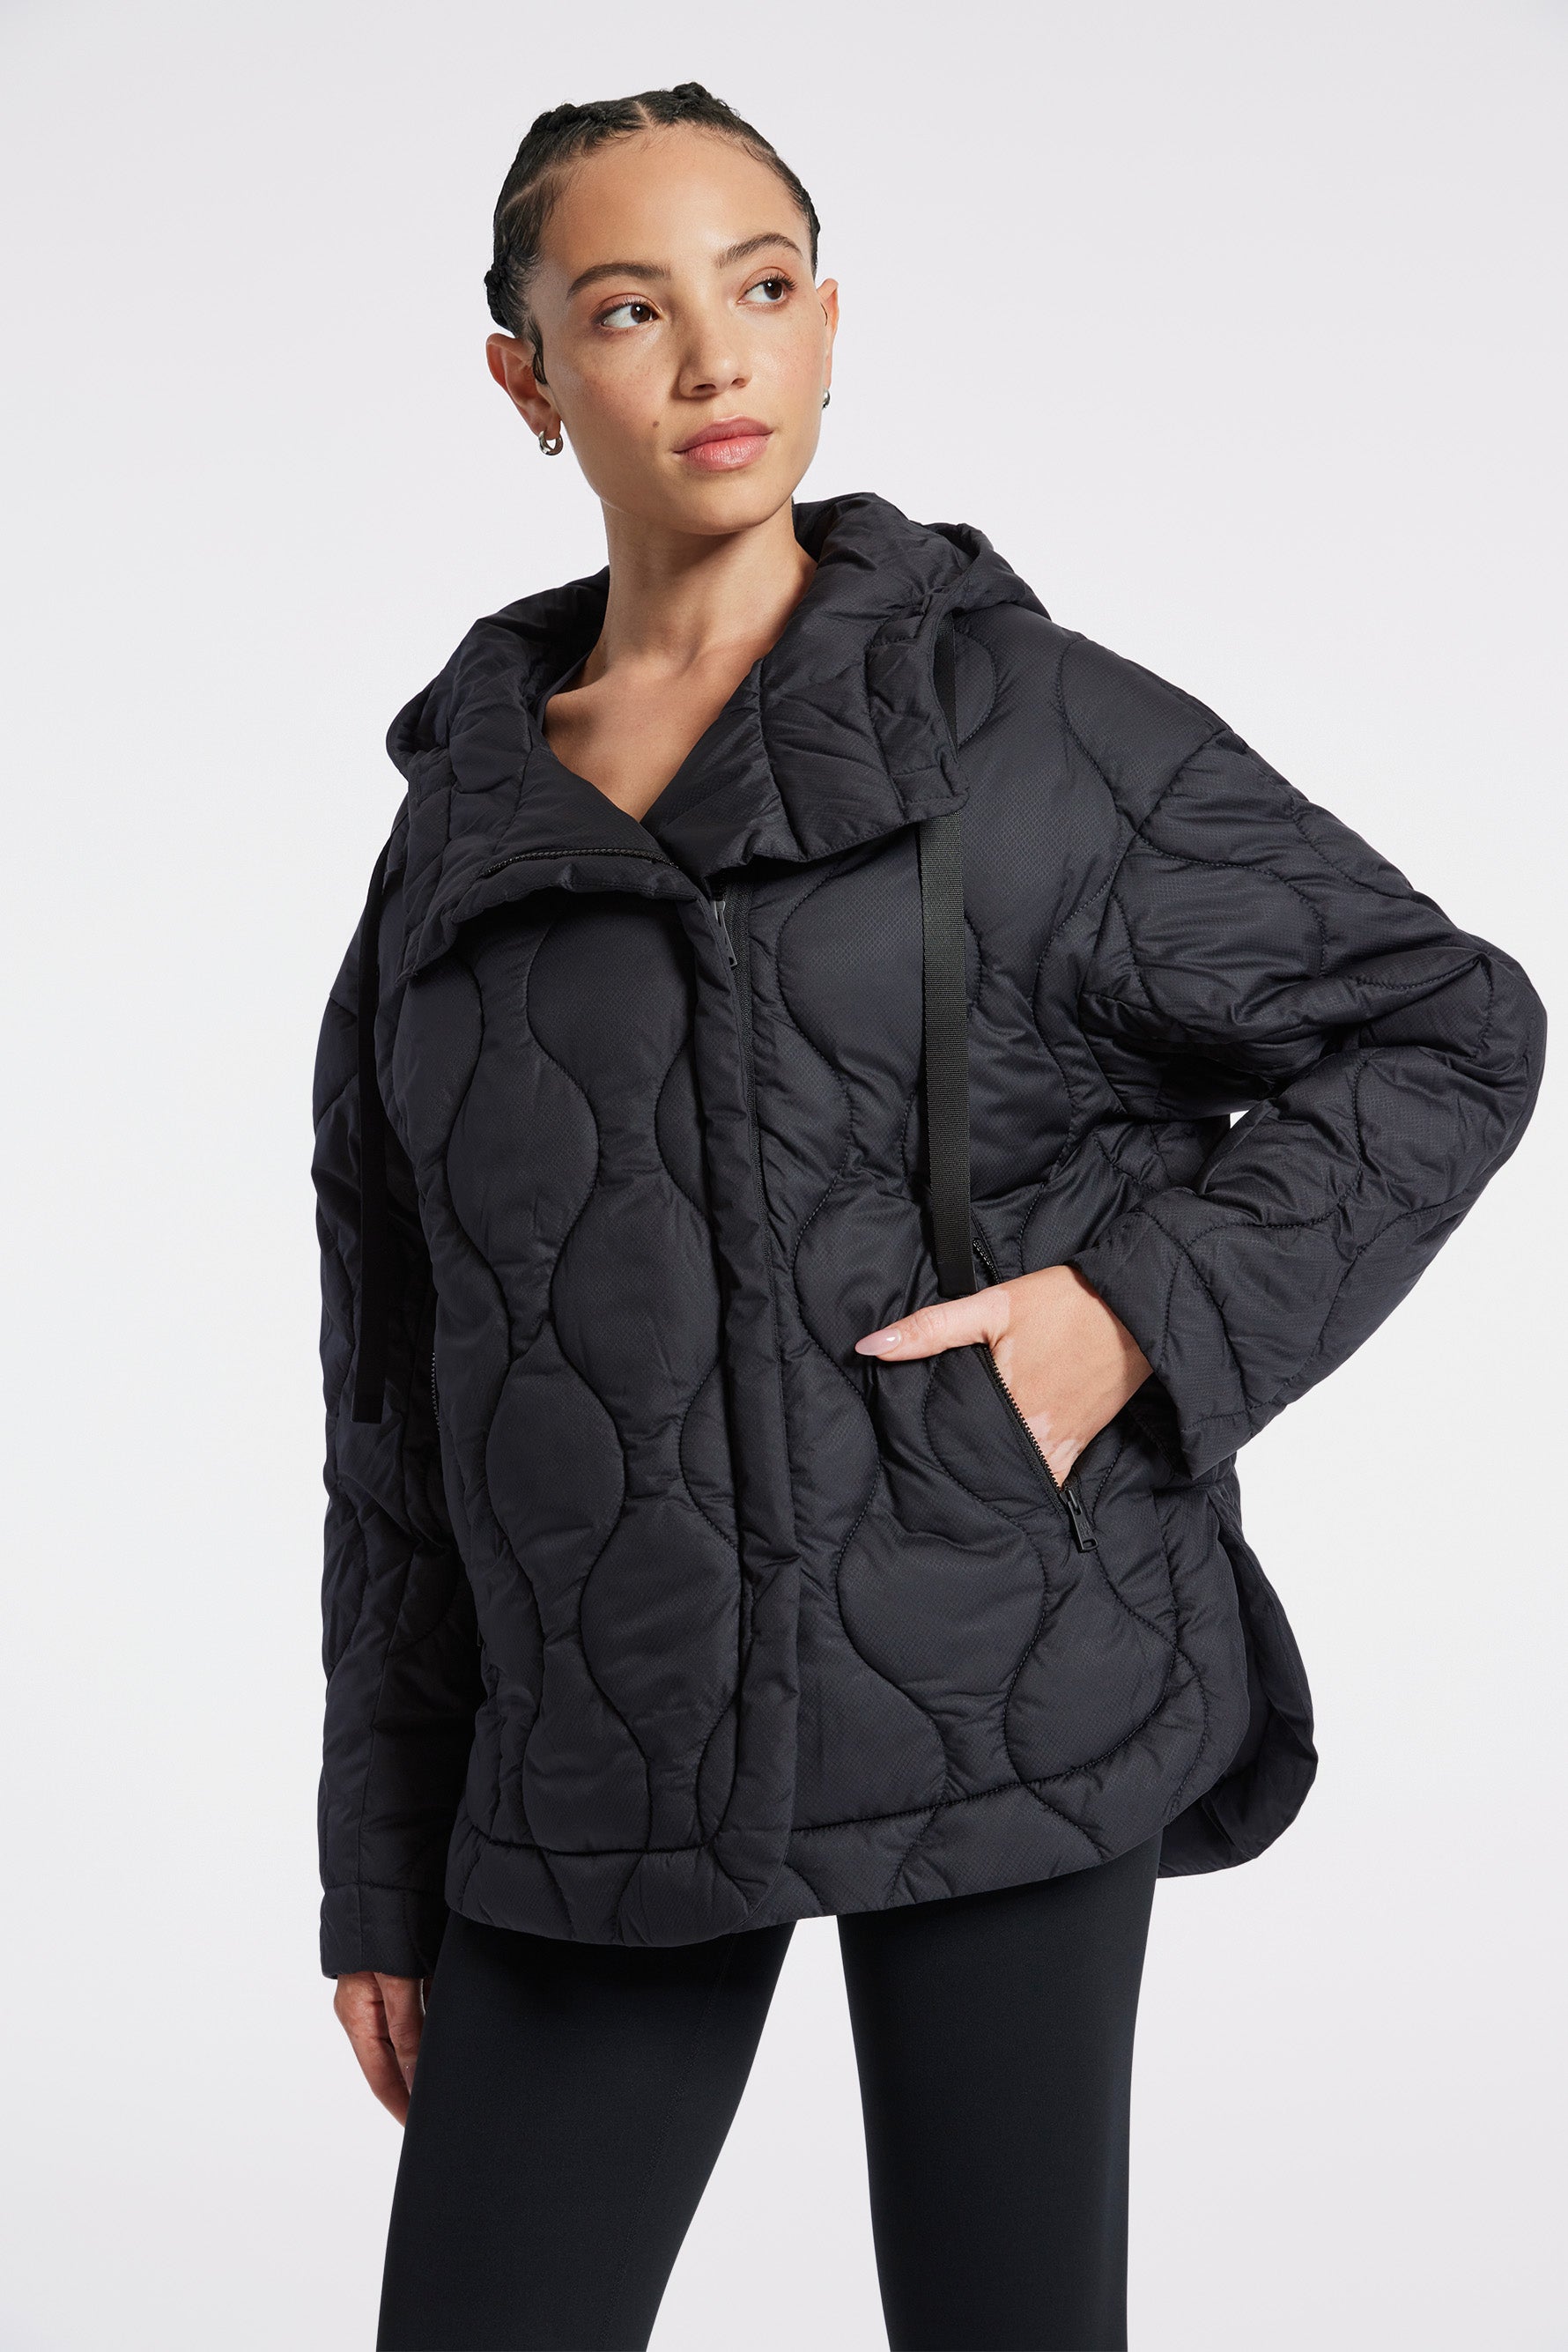 Alp N Rock Nori Quilted Jacket - Black - Women's Size M